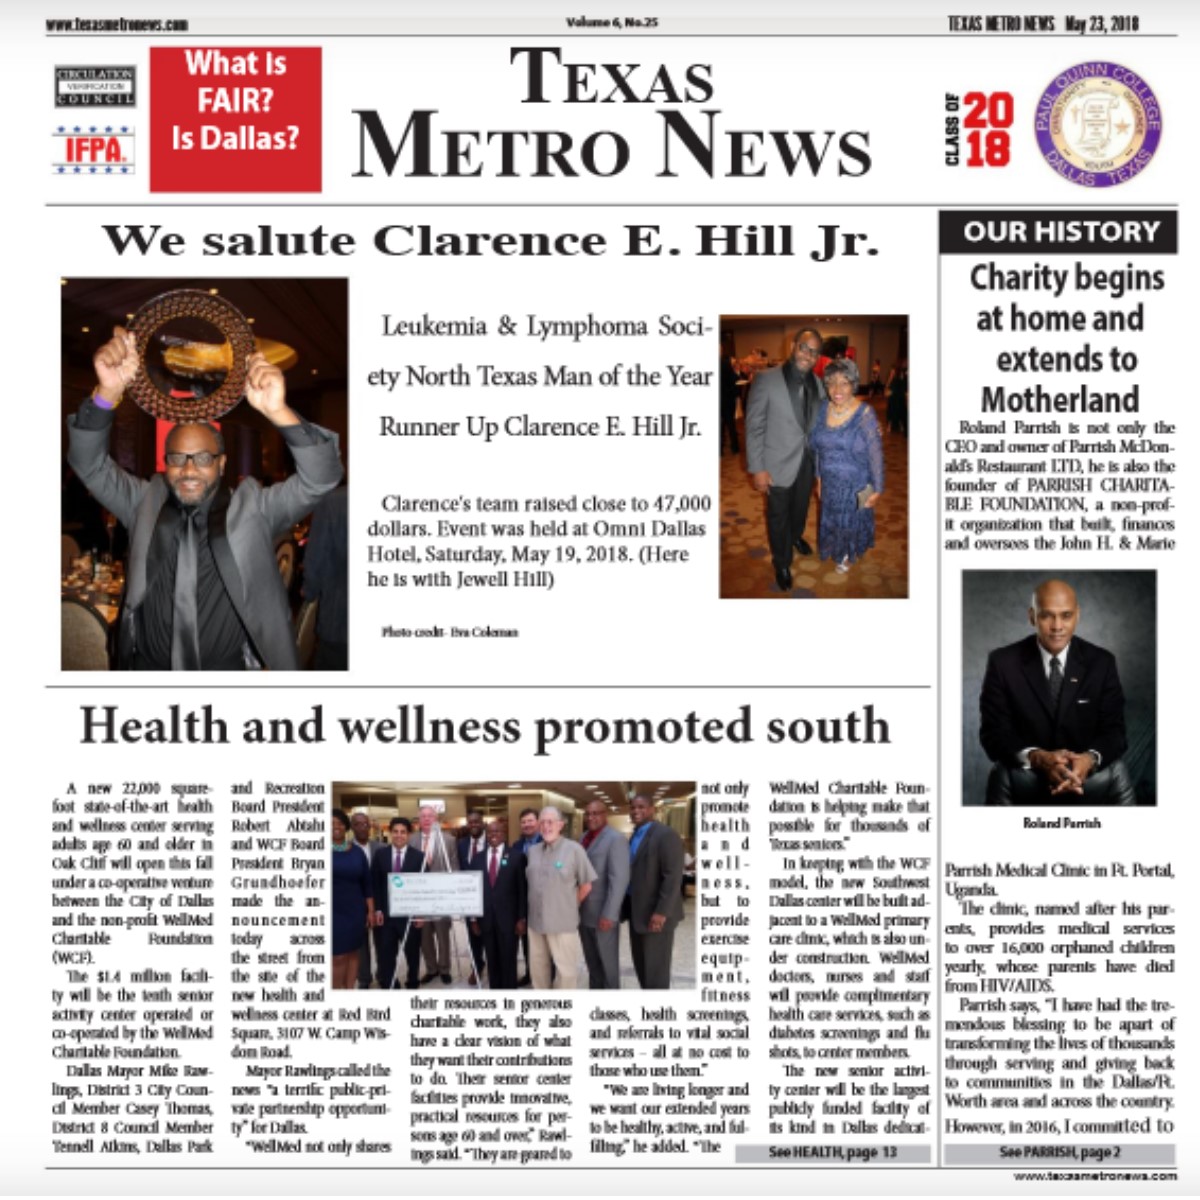 Texas Metro News: 5/23/18